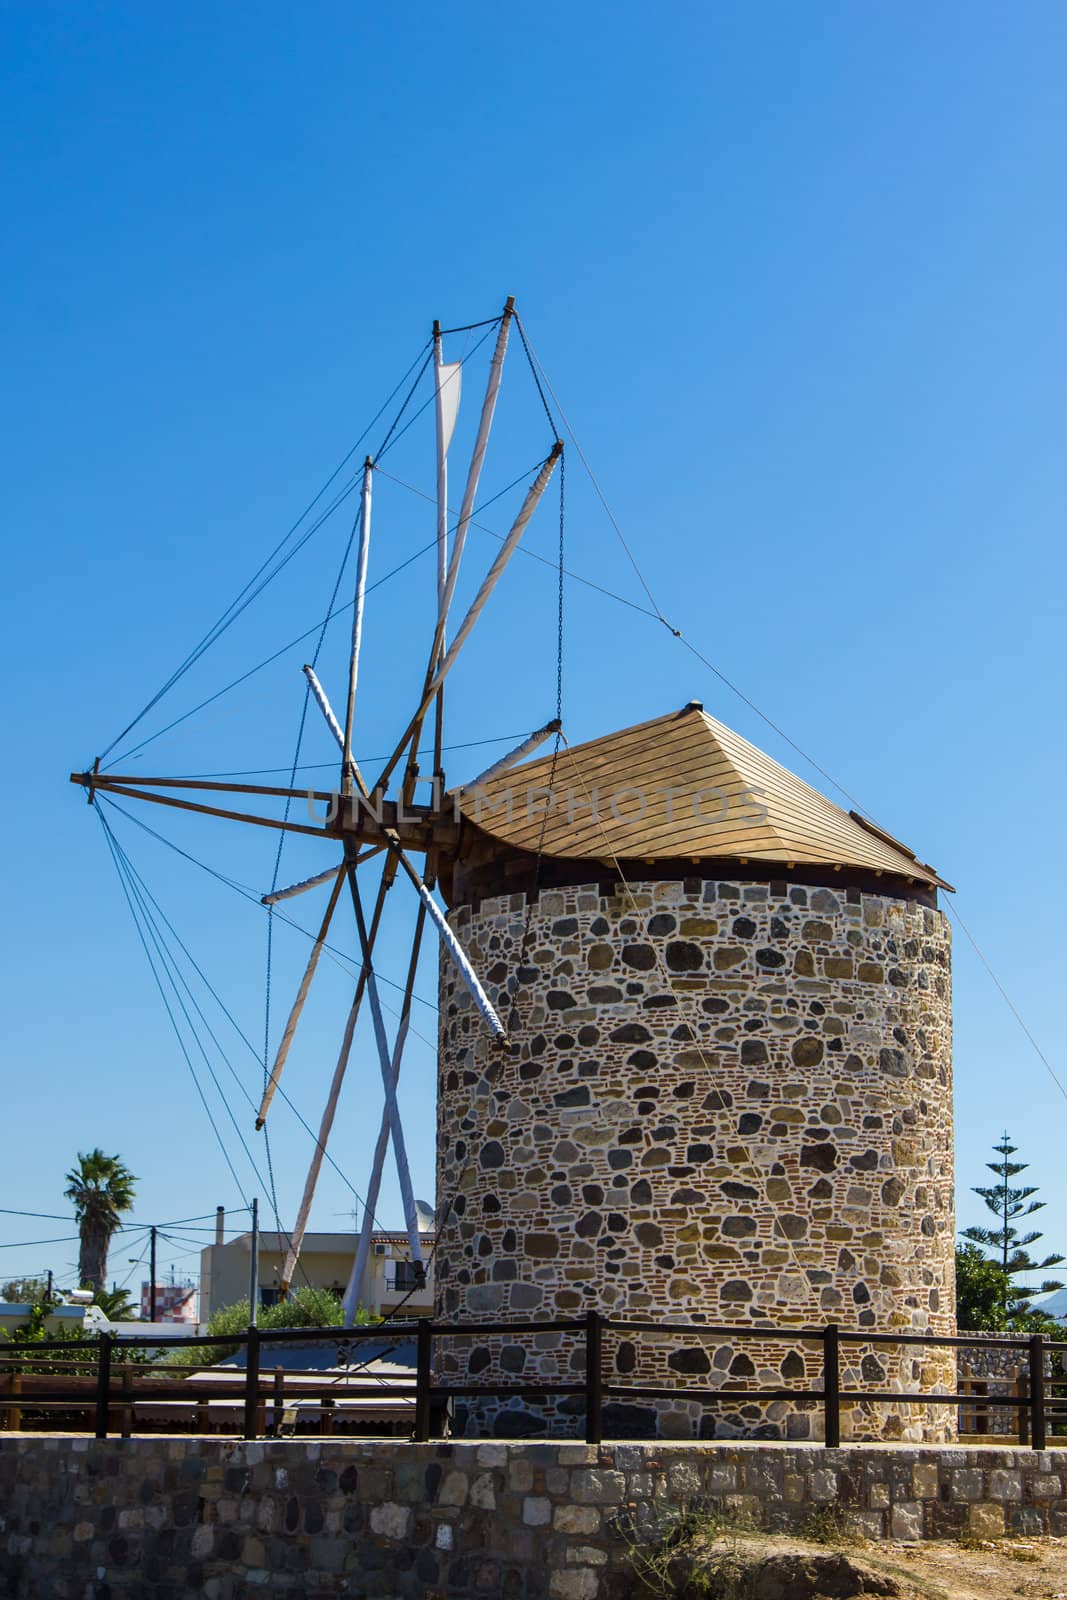 Old windmill from the greek island of Kos by huntz